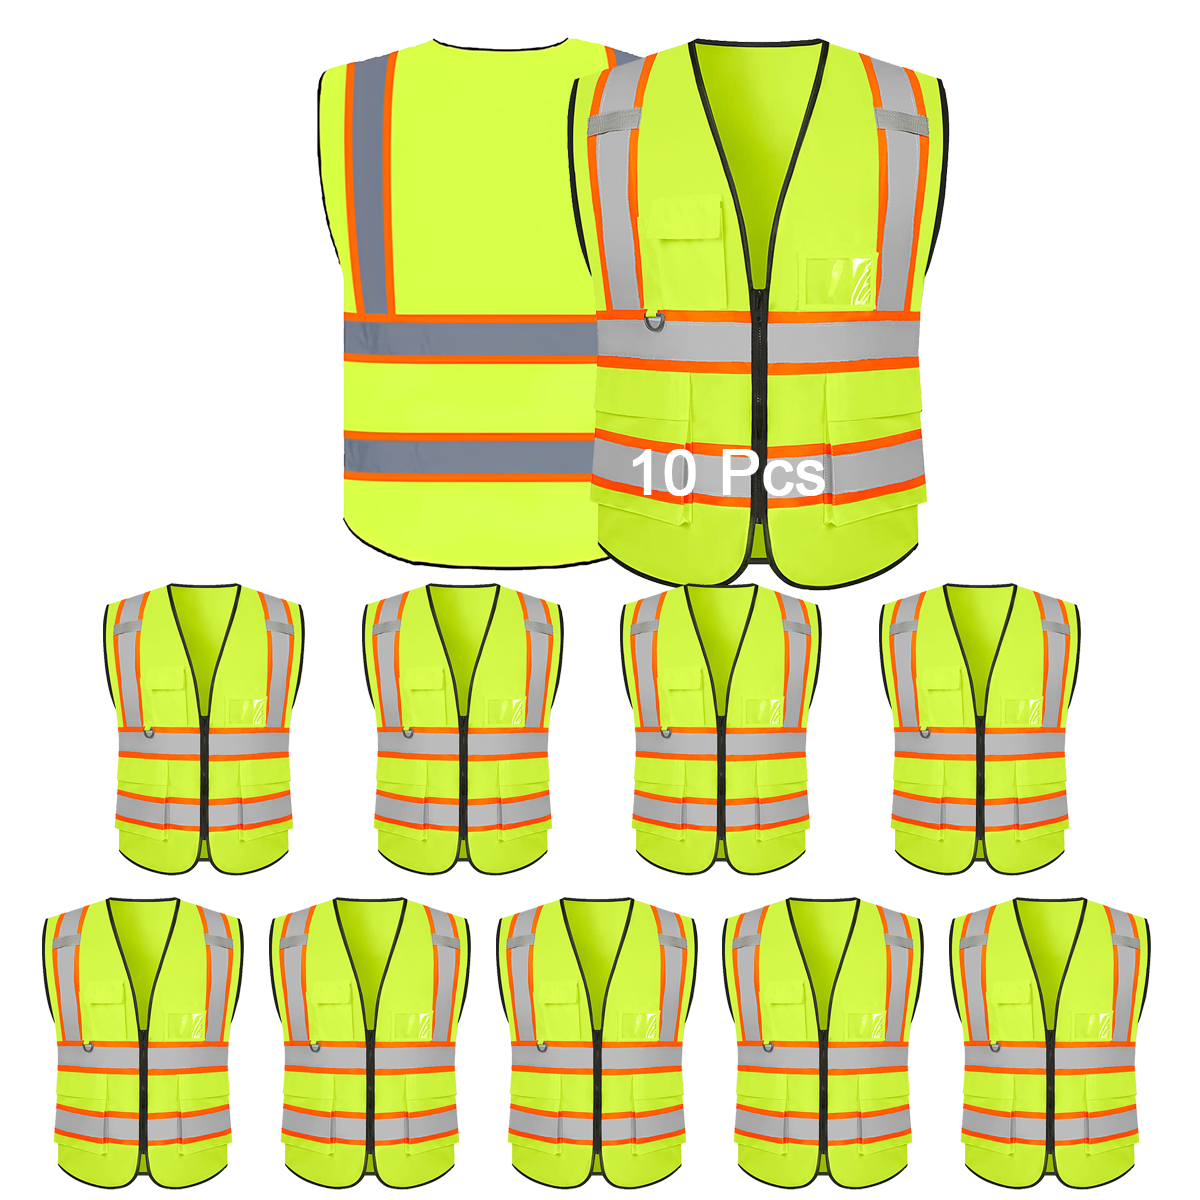 10 pcs safety vest yellow